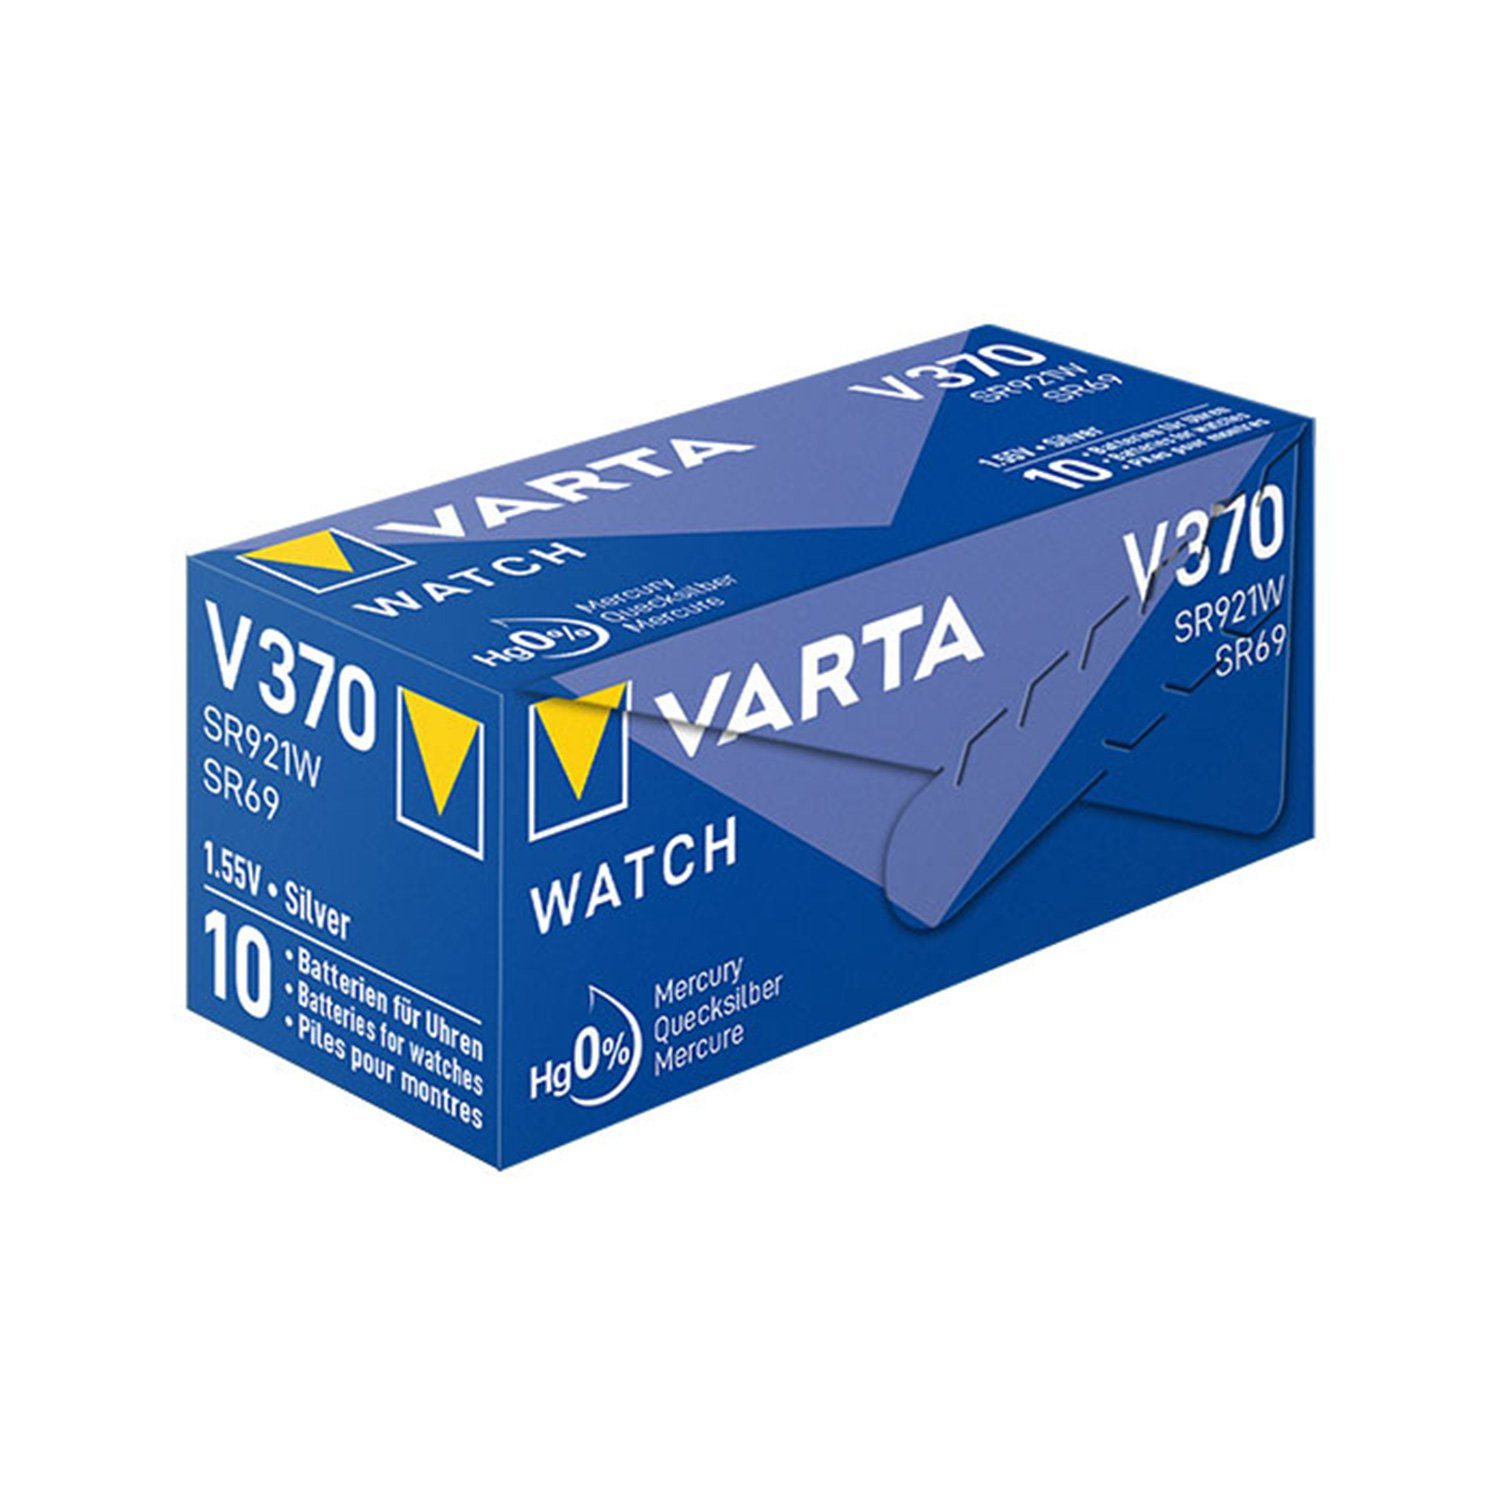 VARTA Varta 370 Knopfzelle Batterie